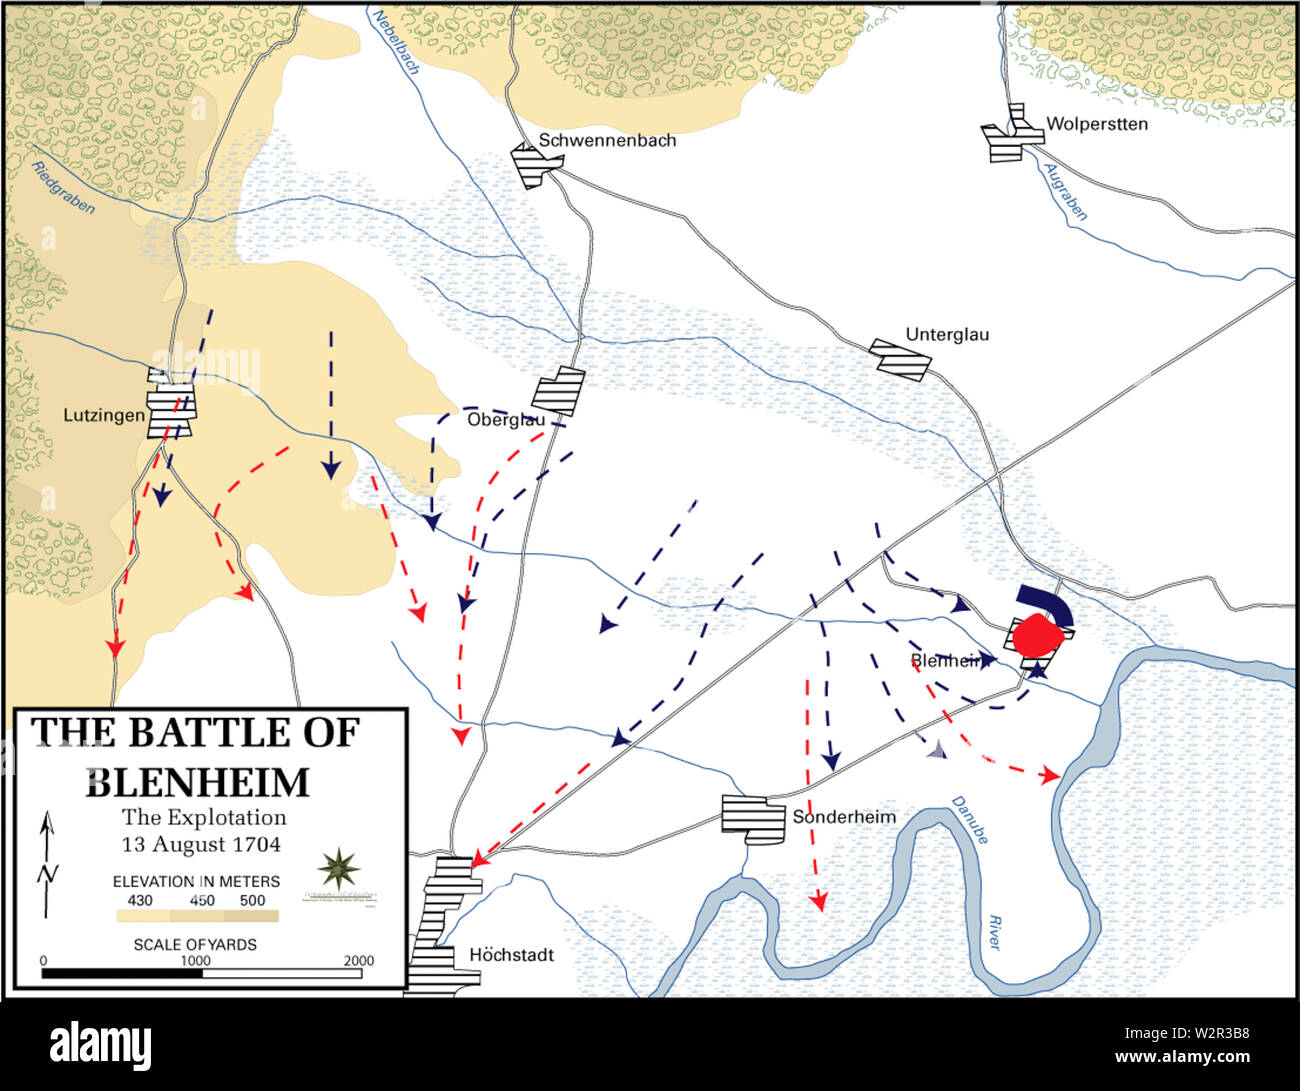 Battle of Blenhiem - Explotation, 13 August 1704 Stock Photo